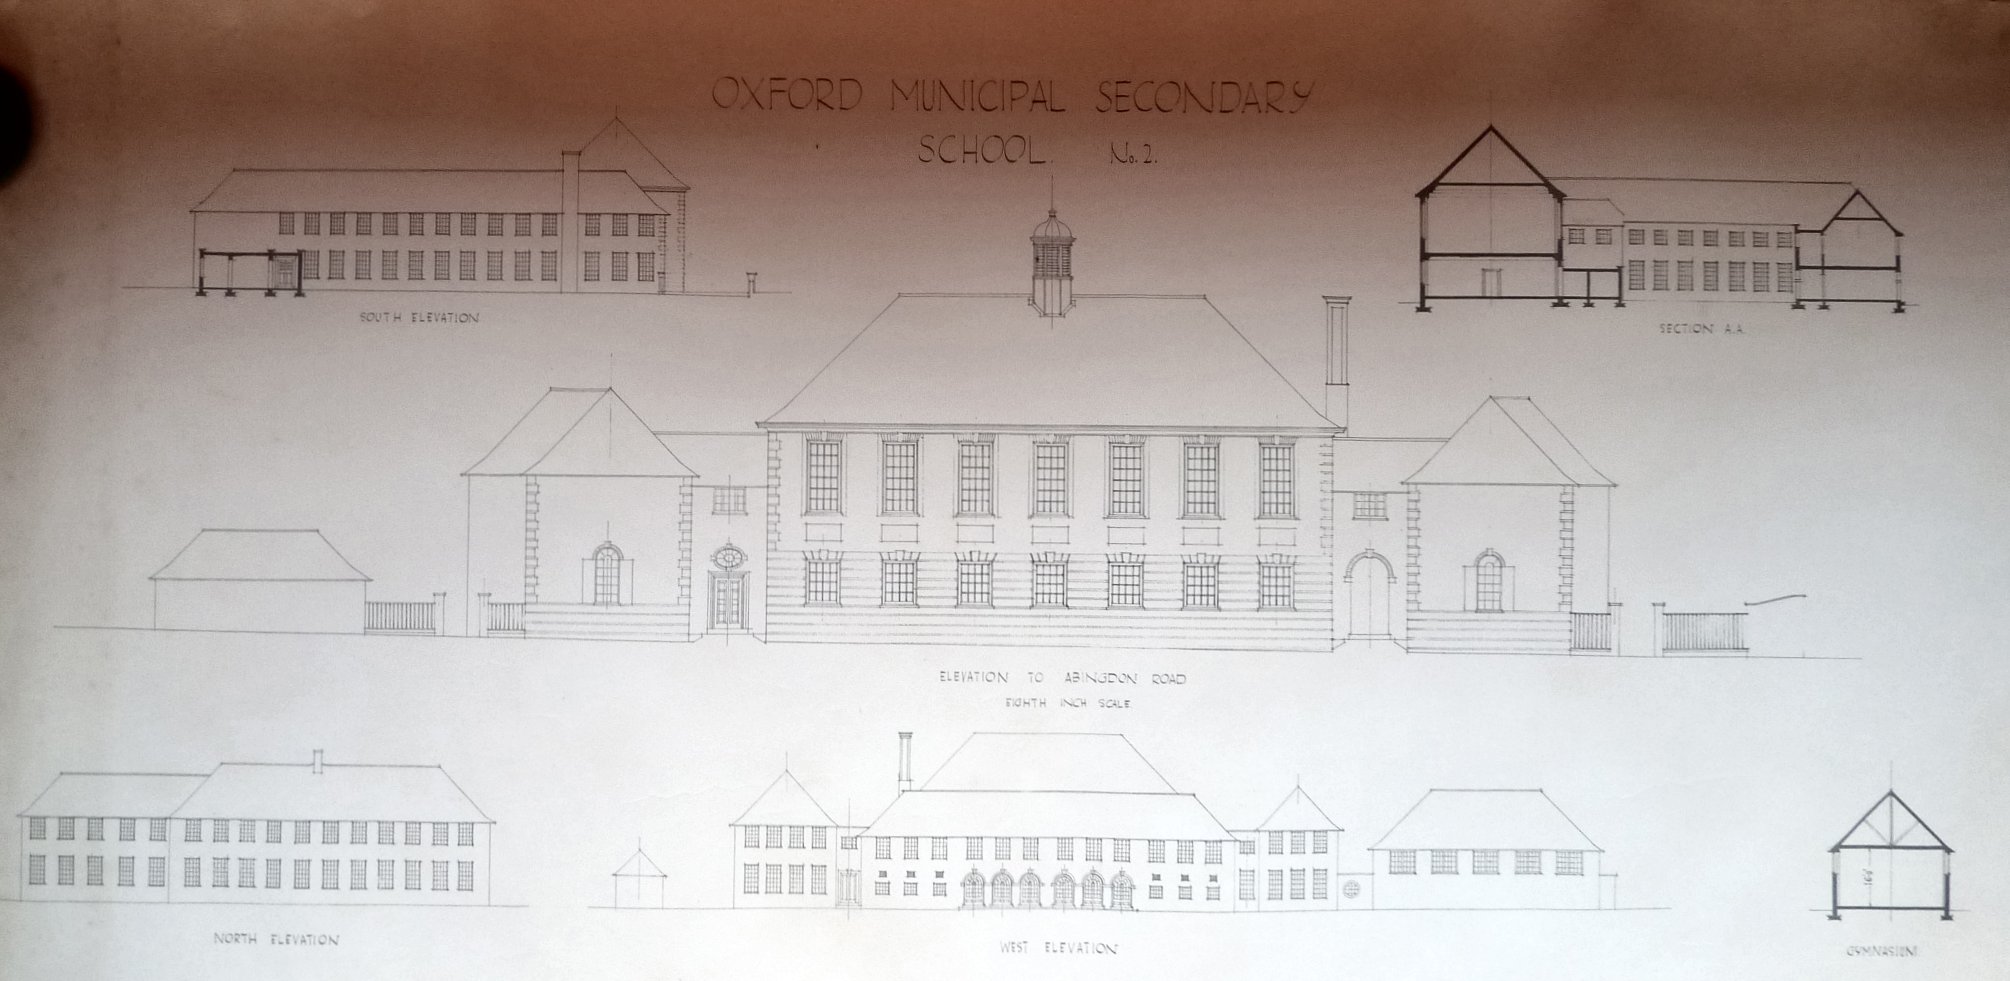 [Plans for new municipal secondary school Abingdon Road]